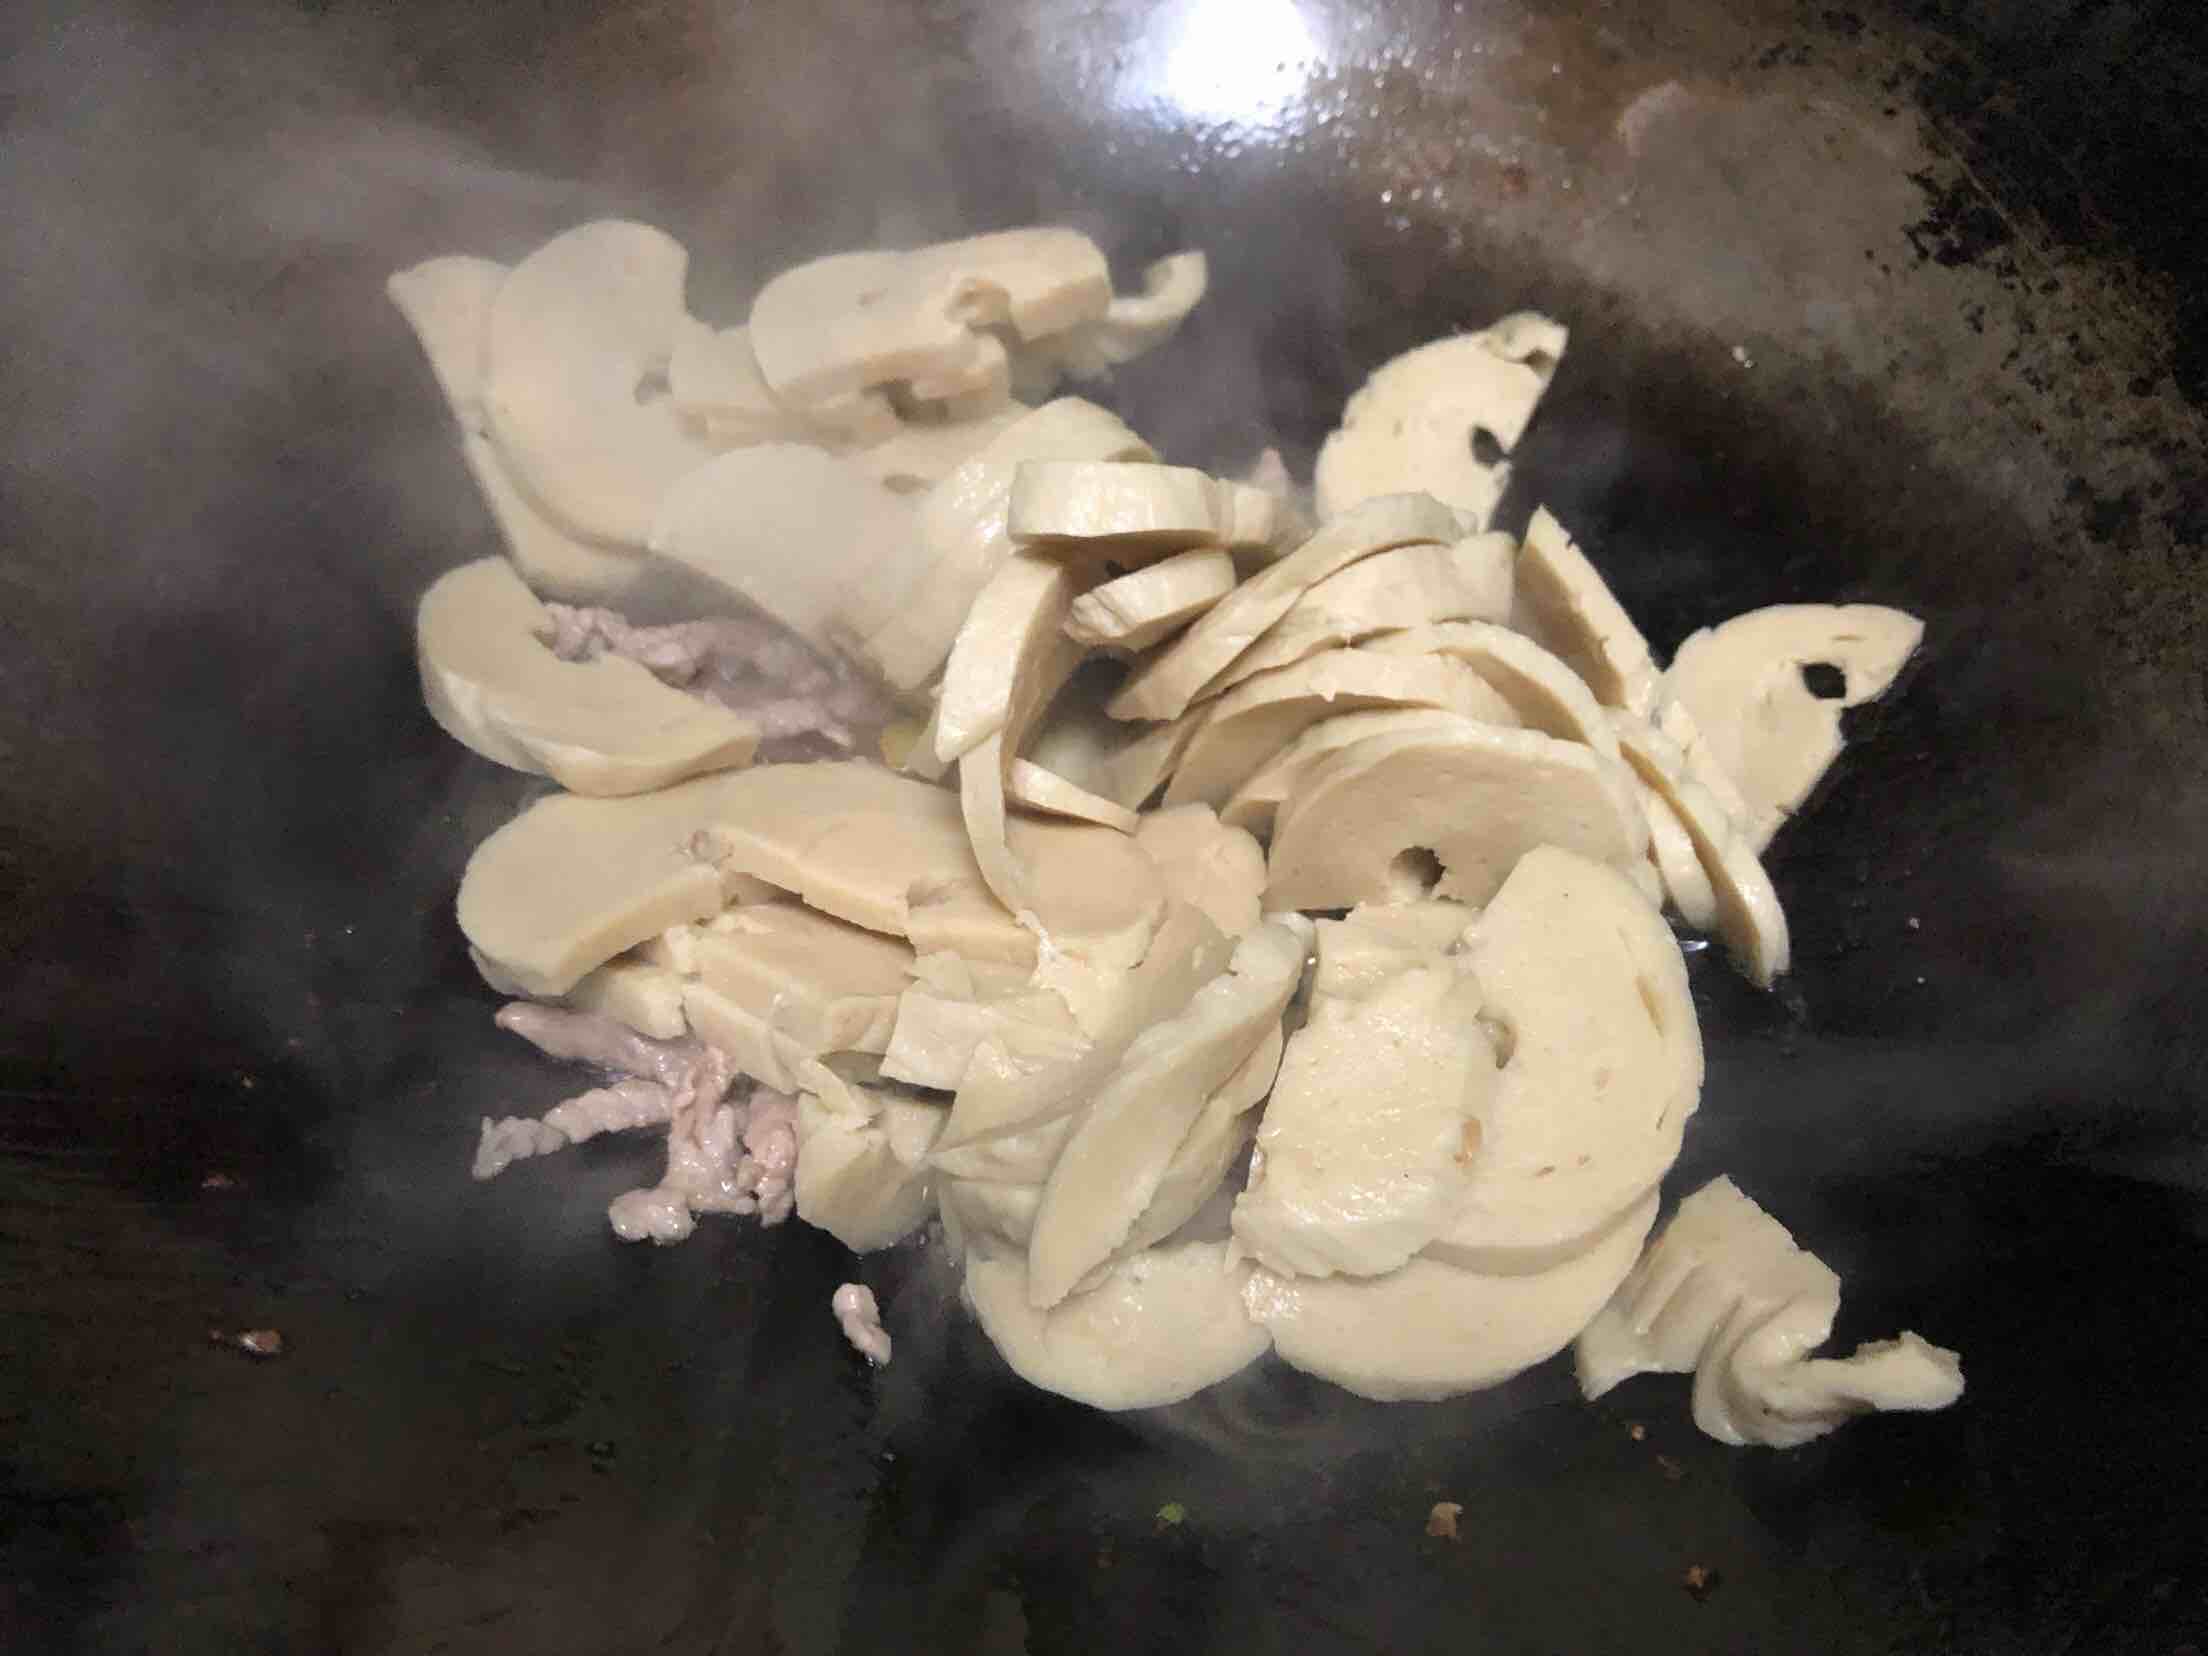 Fried Shredded Pork with Gluten recipe